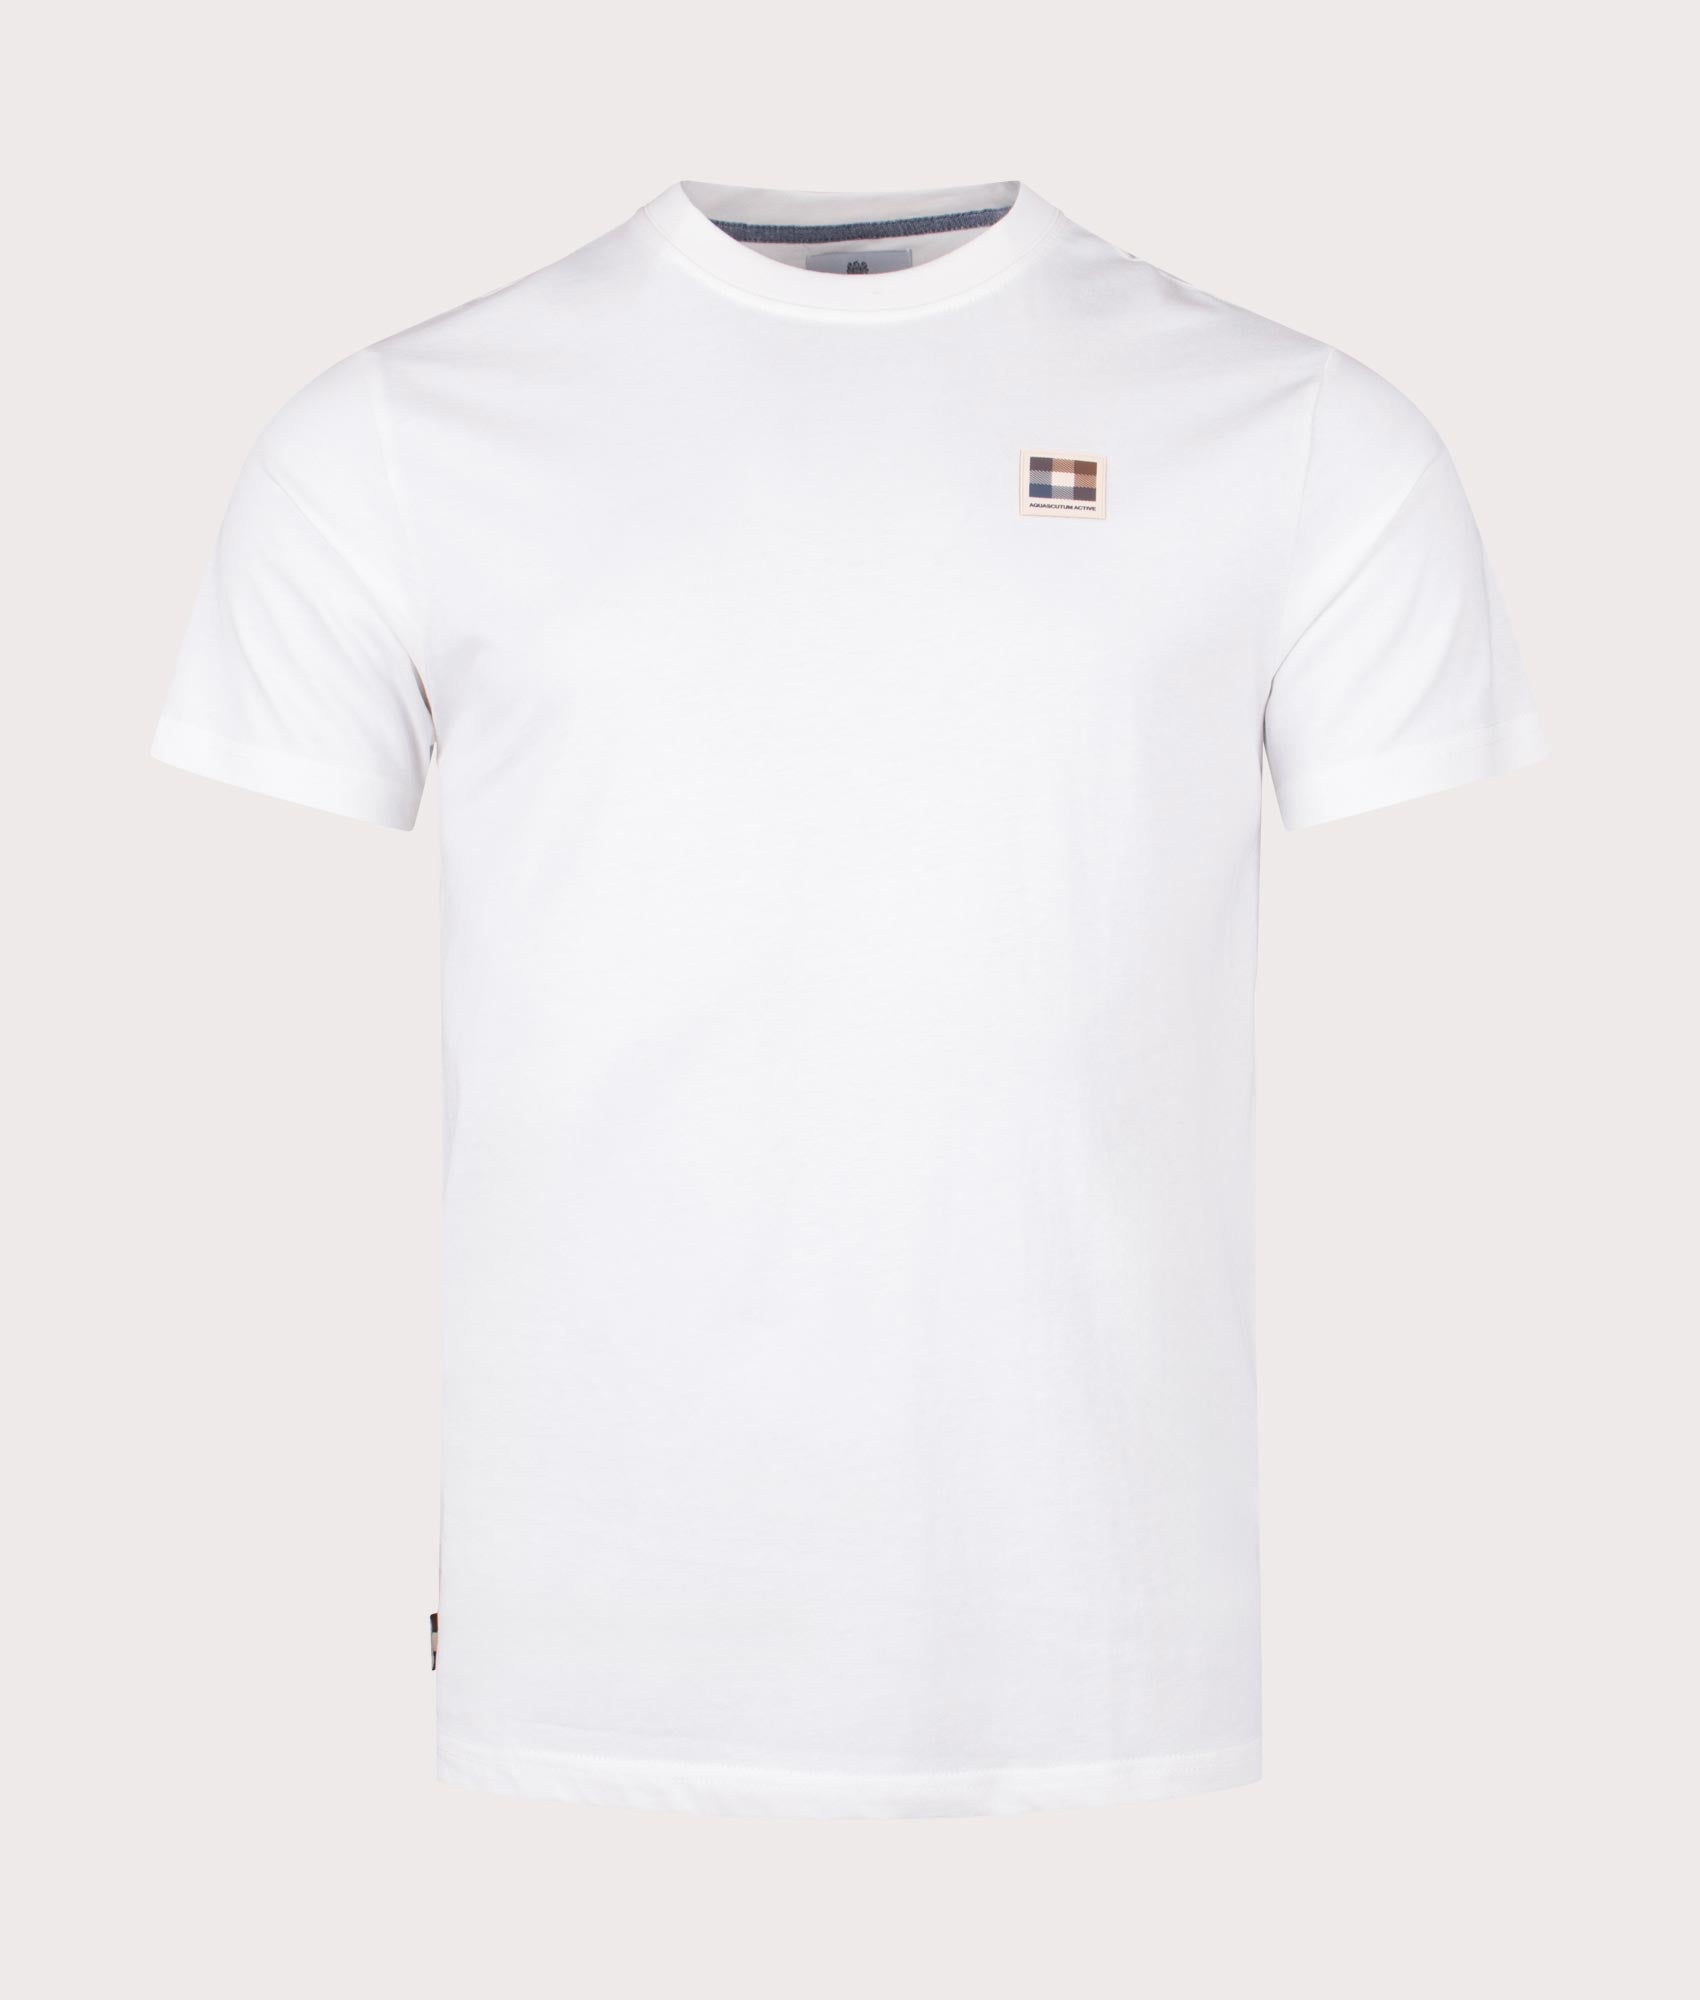 Aquascutum Mens Active Club Check Patch T-Shirt - Colour: 01 Optical White - Size: Large